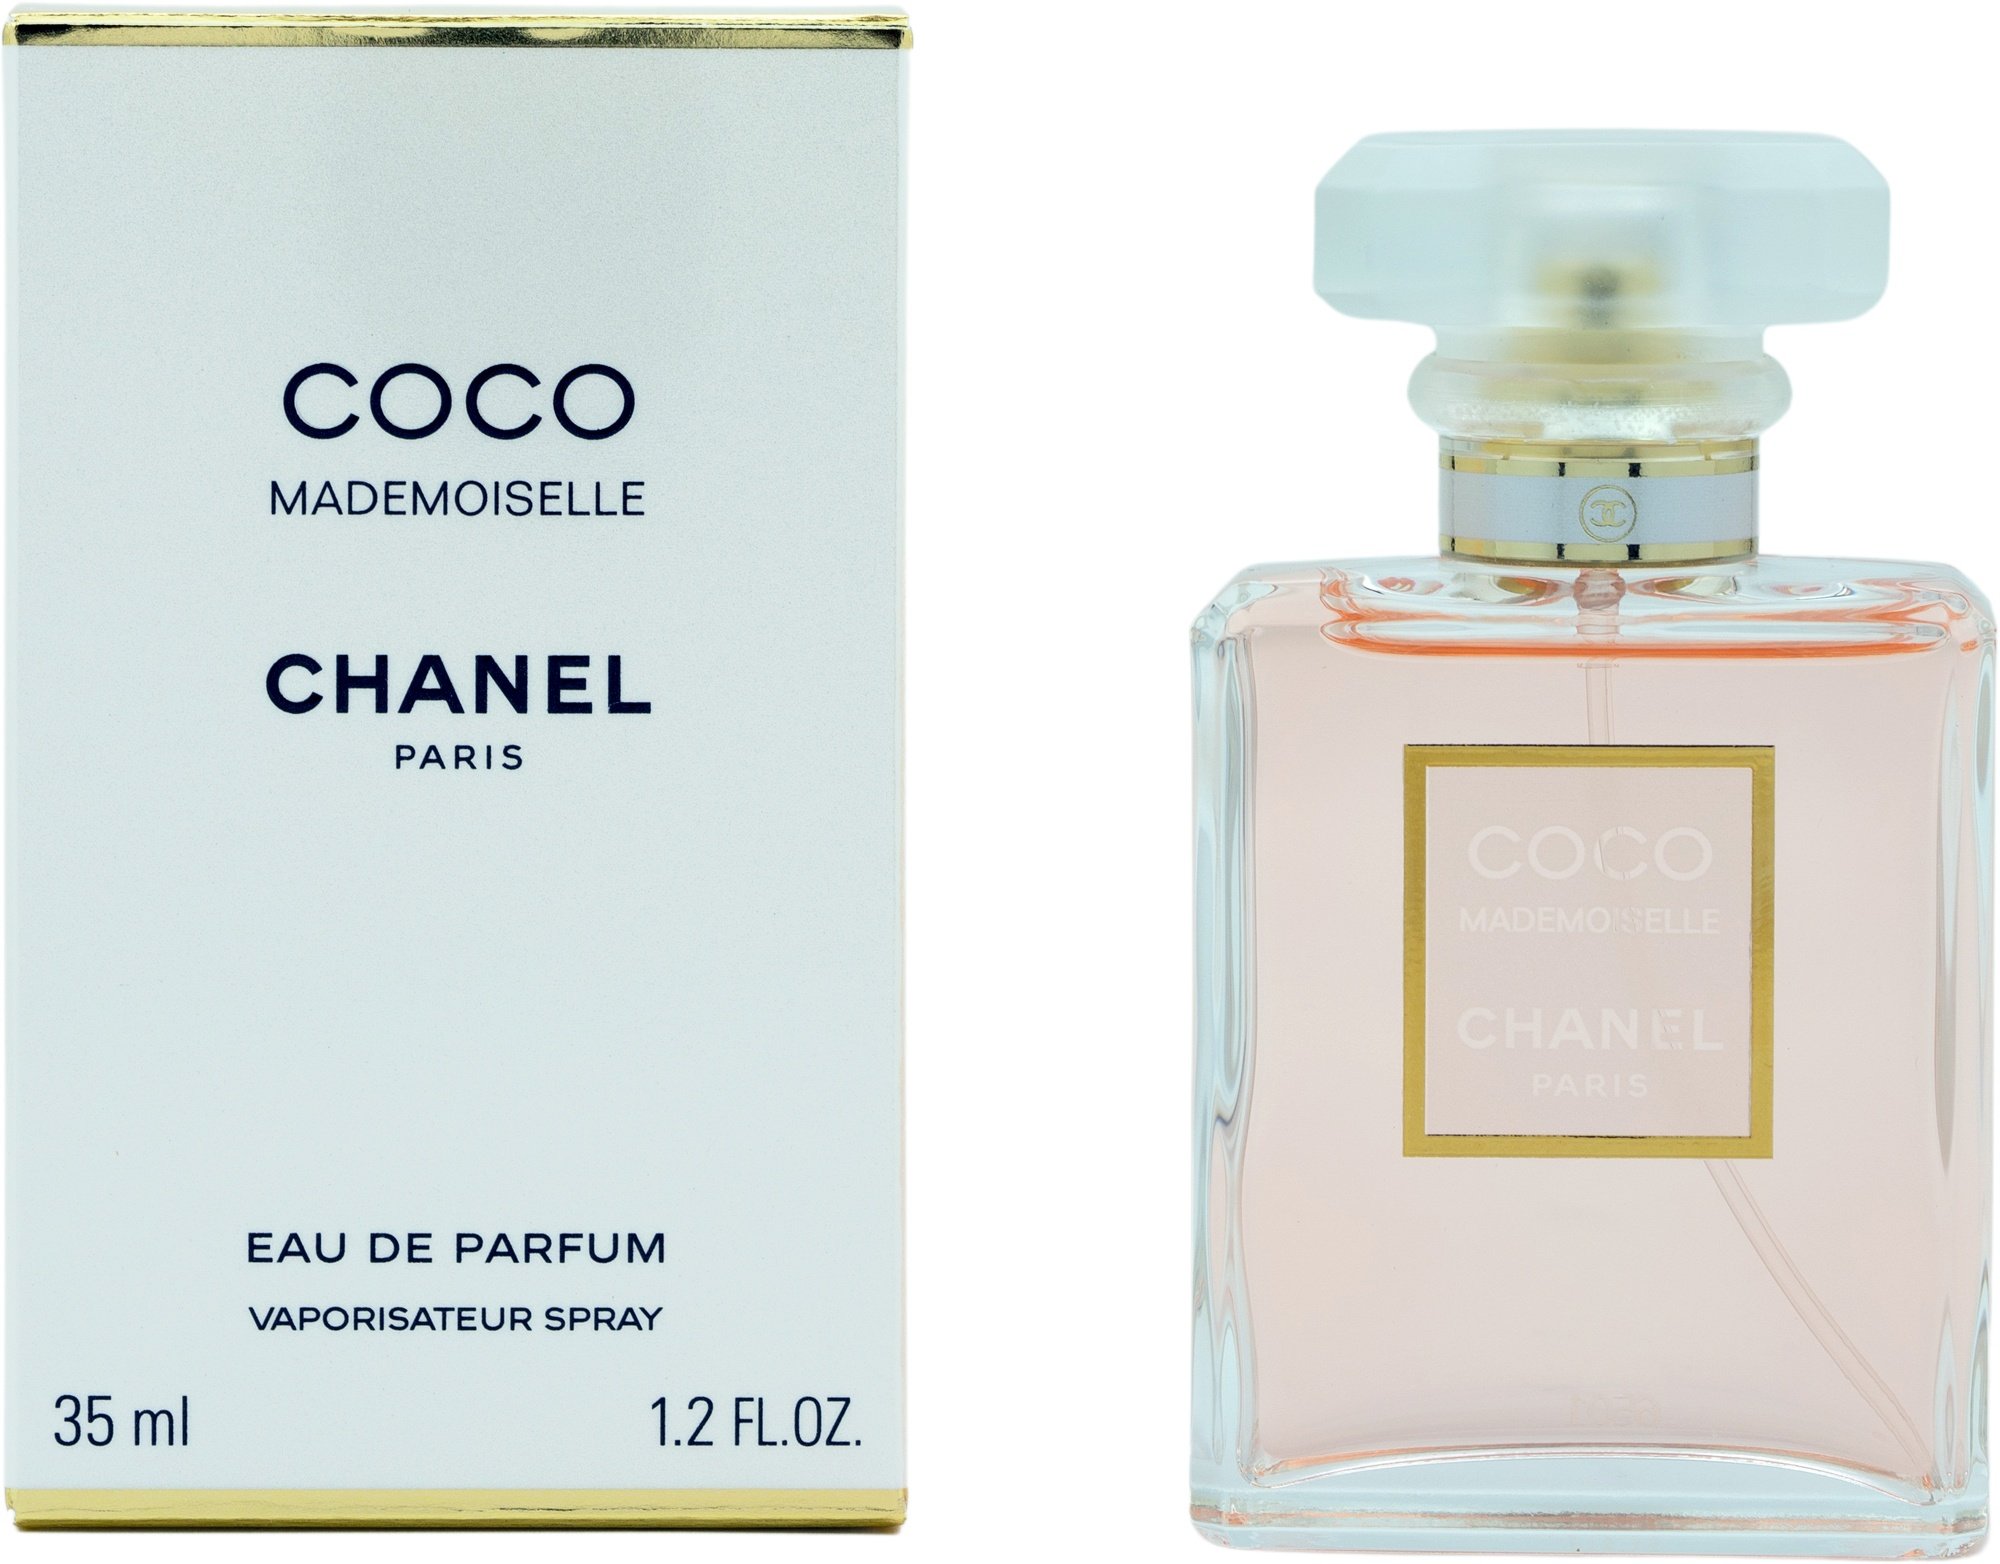 Chanel coco mademoiselle mùi hương bất tử  Mifashop